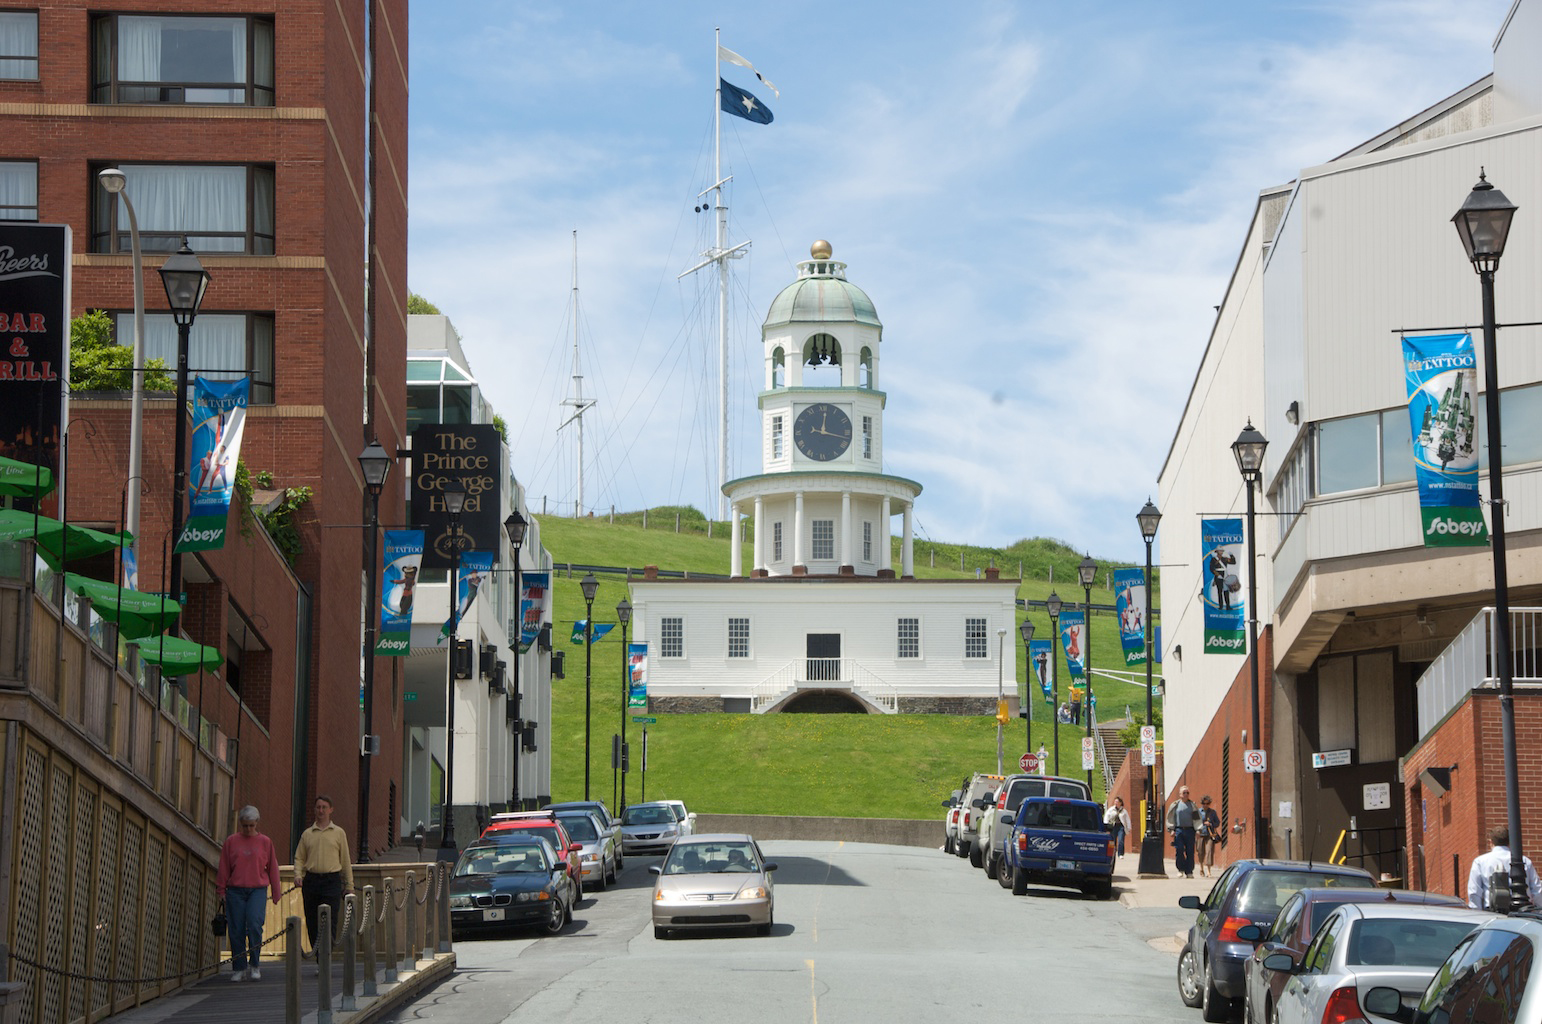 Horloge de la ville d'Halifax au pied de Citadel Hill, Prince George Hotel